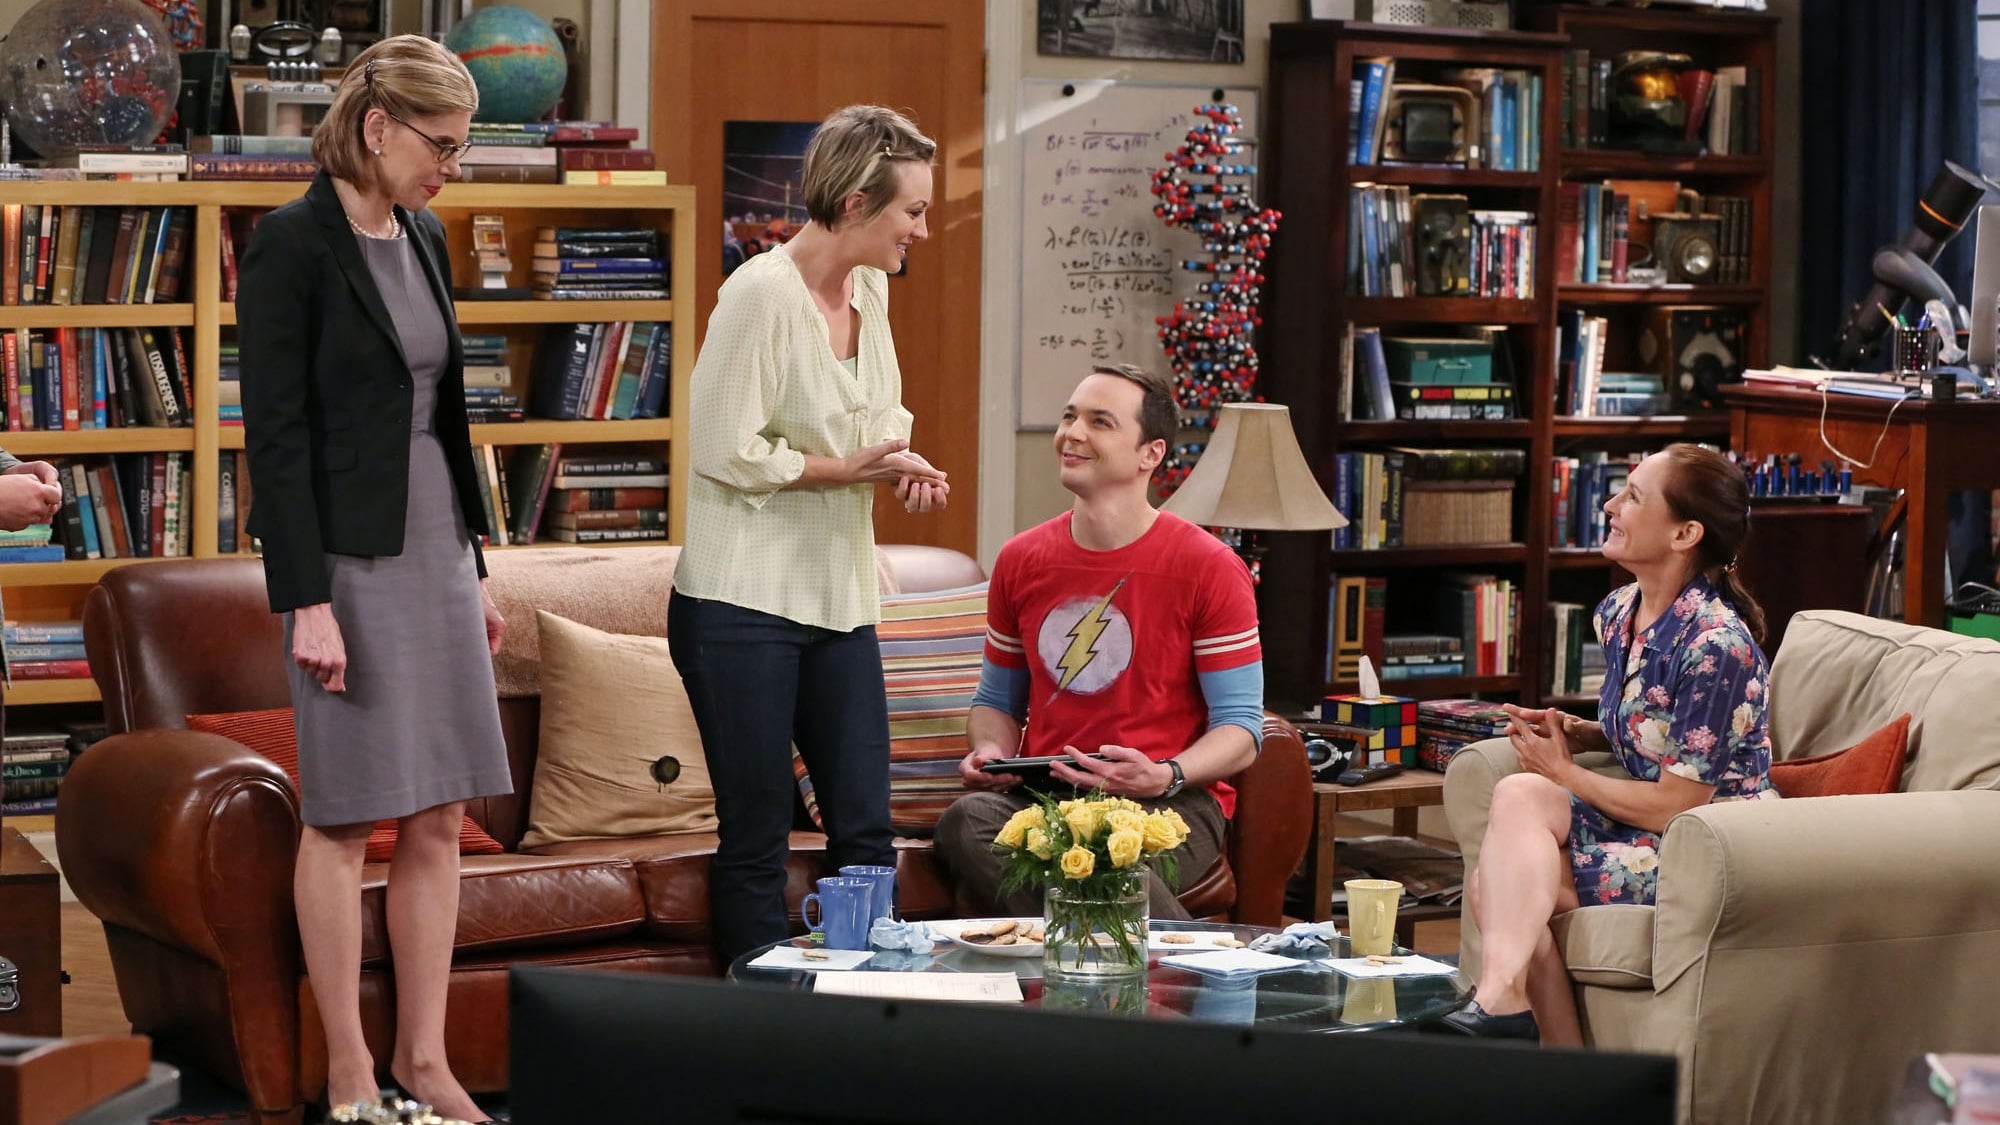 Watch The Big Bang Theory: Season 8 Episode 23 Online Full Episode FREE - Where To Watch The Big Bang Theory Canada